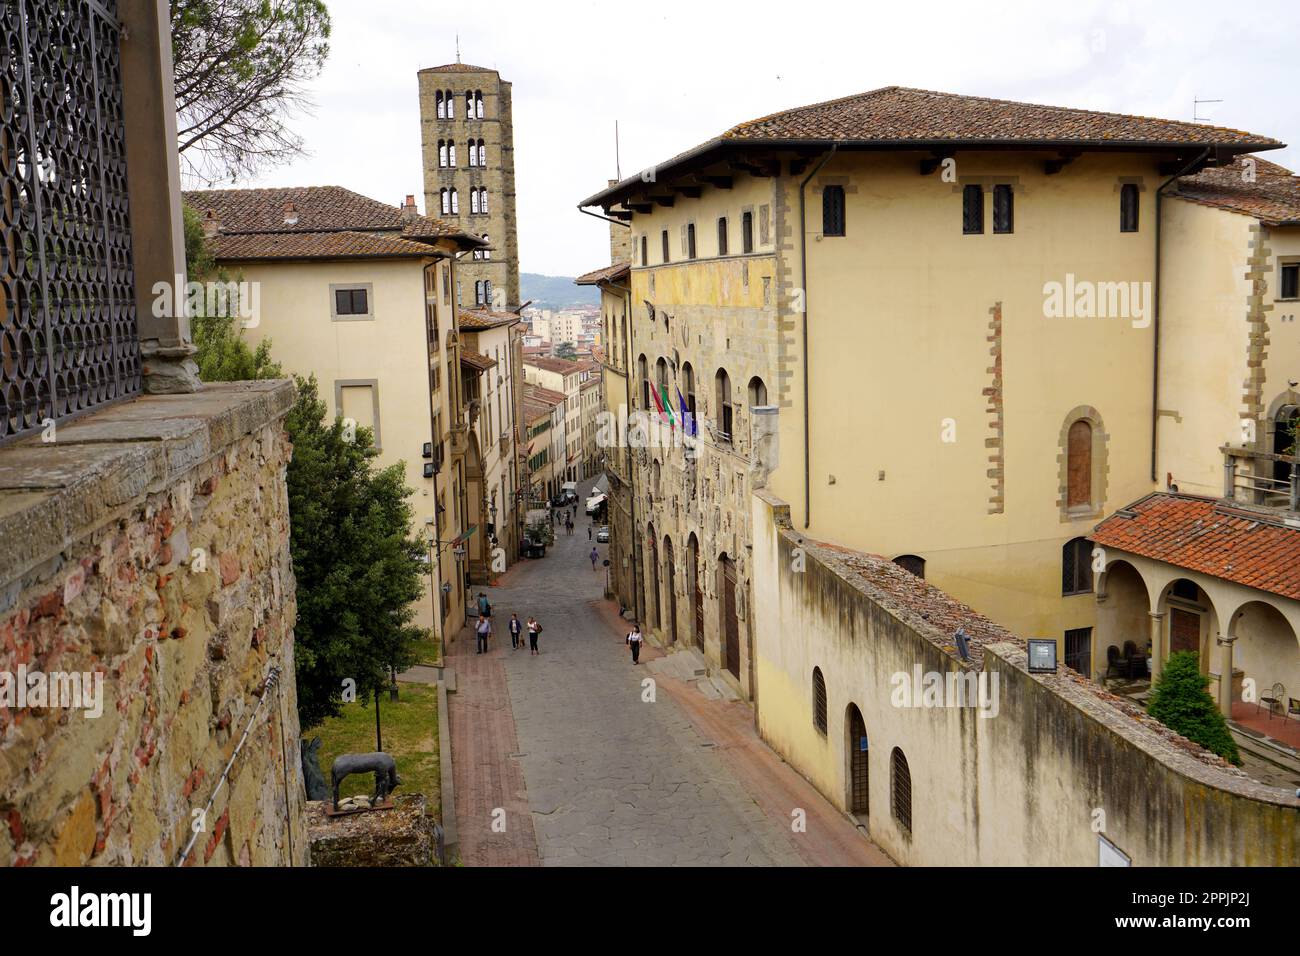 AREZZO, ITALY - JUNE 24, 2022: Aerial view of the historic mediaeval town of Arezzo, Tuscany, Italy Stock Photo